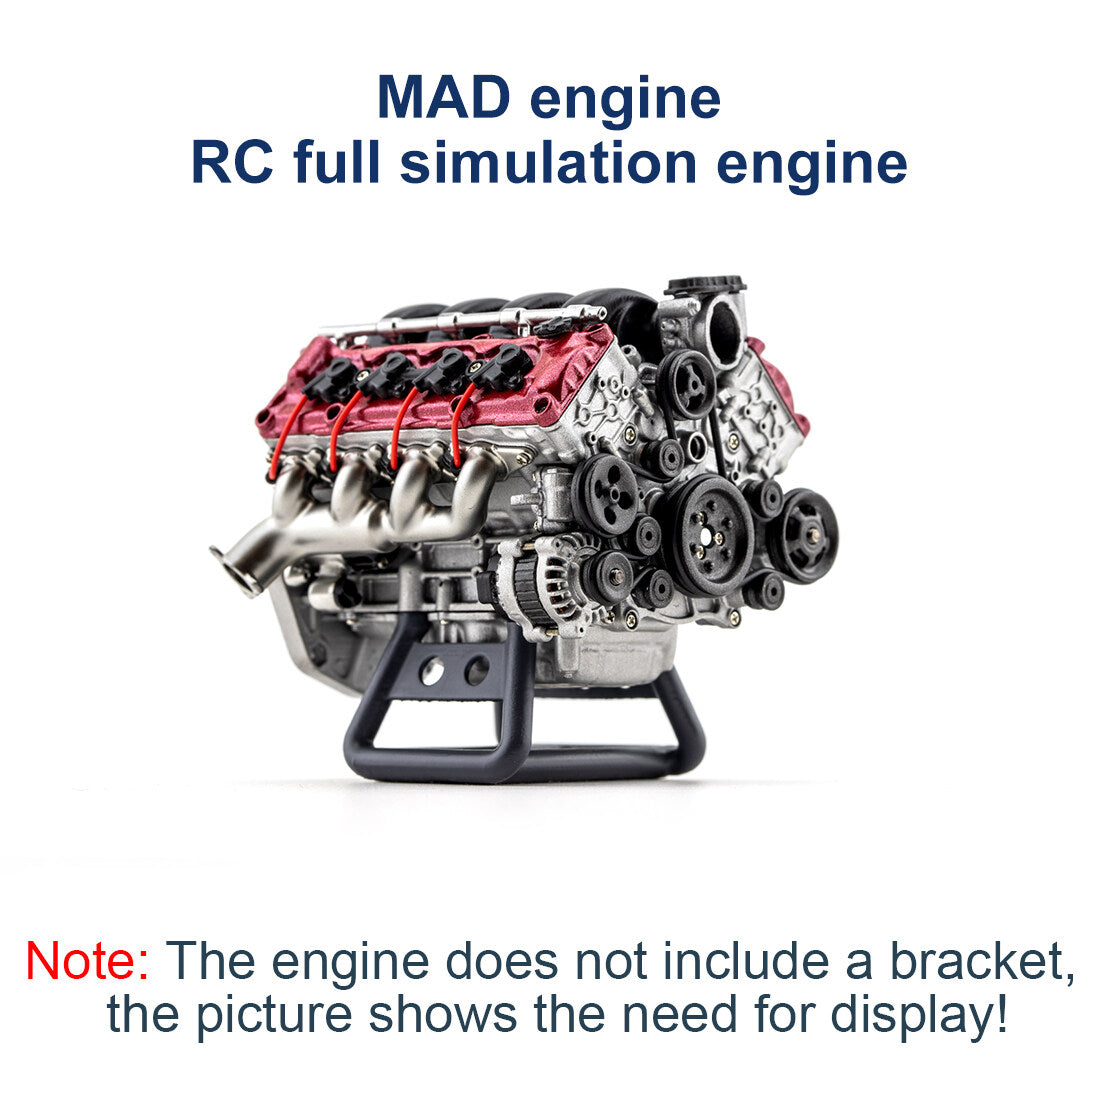 V8 Engine Model Kit - Build Your Own V8 Engine for Capra VS4-10 RC enginediyshop